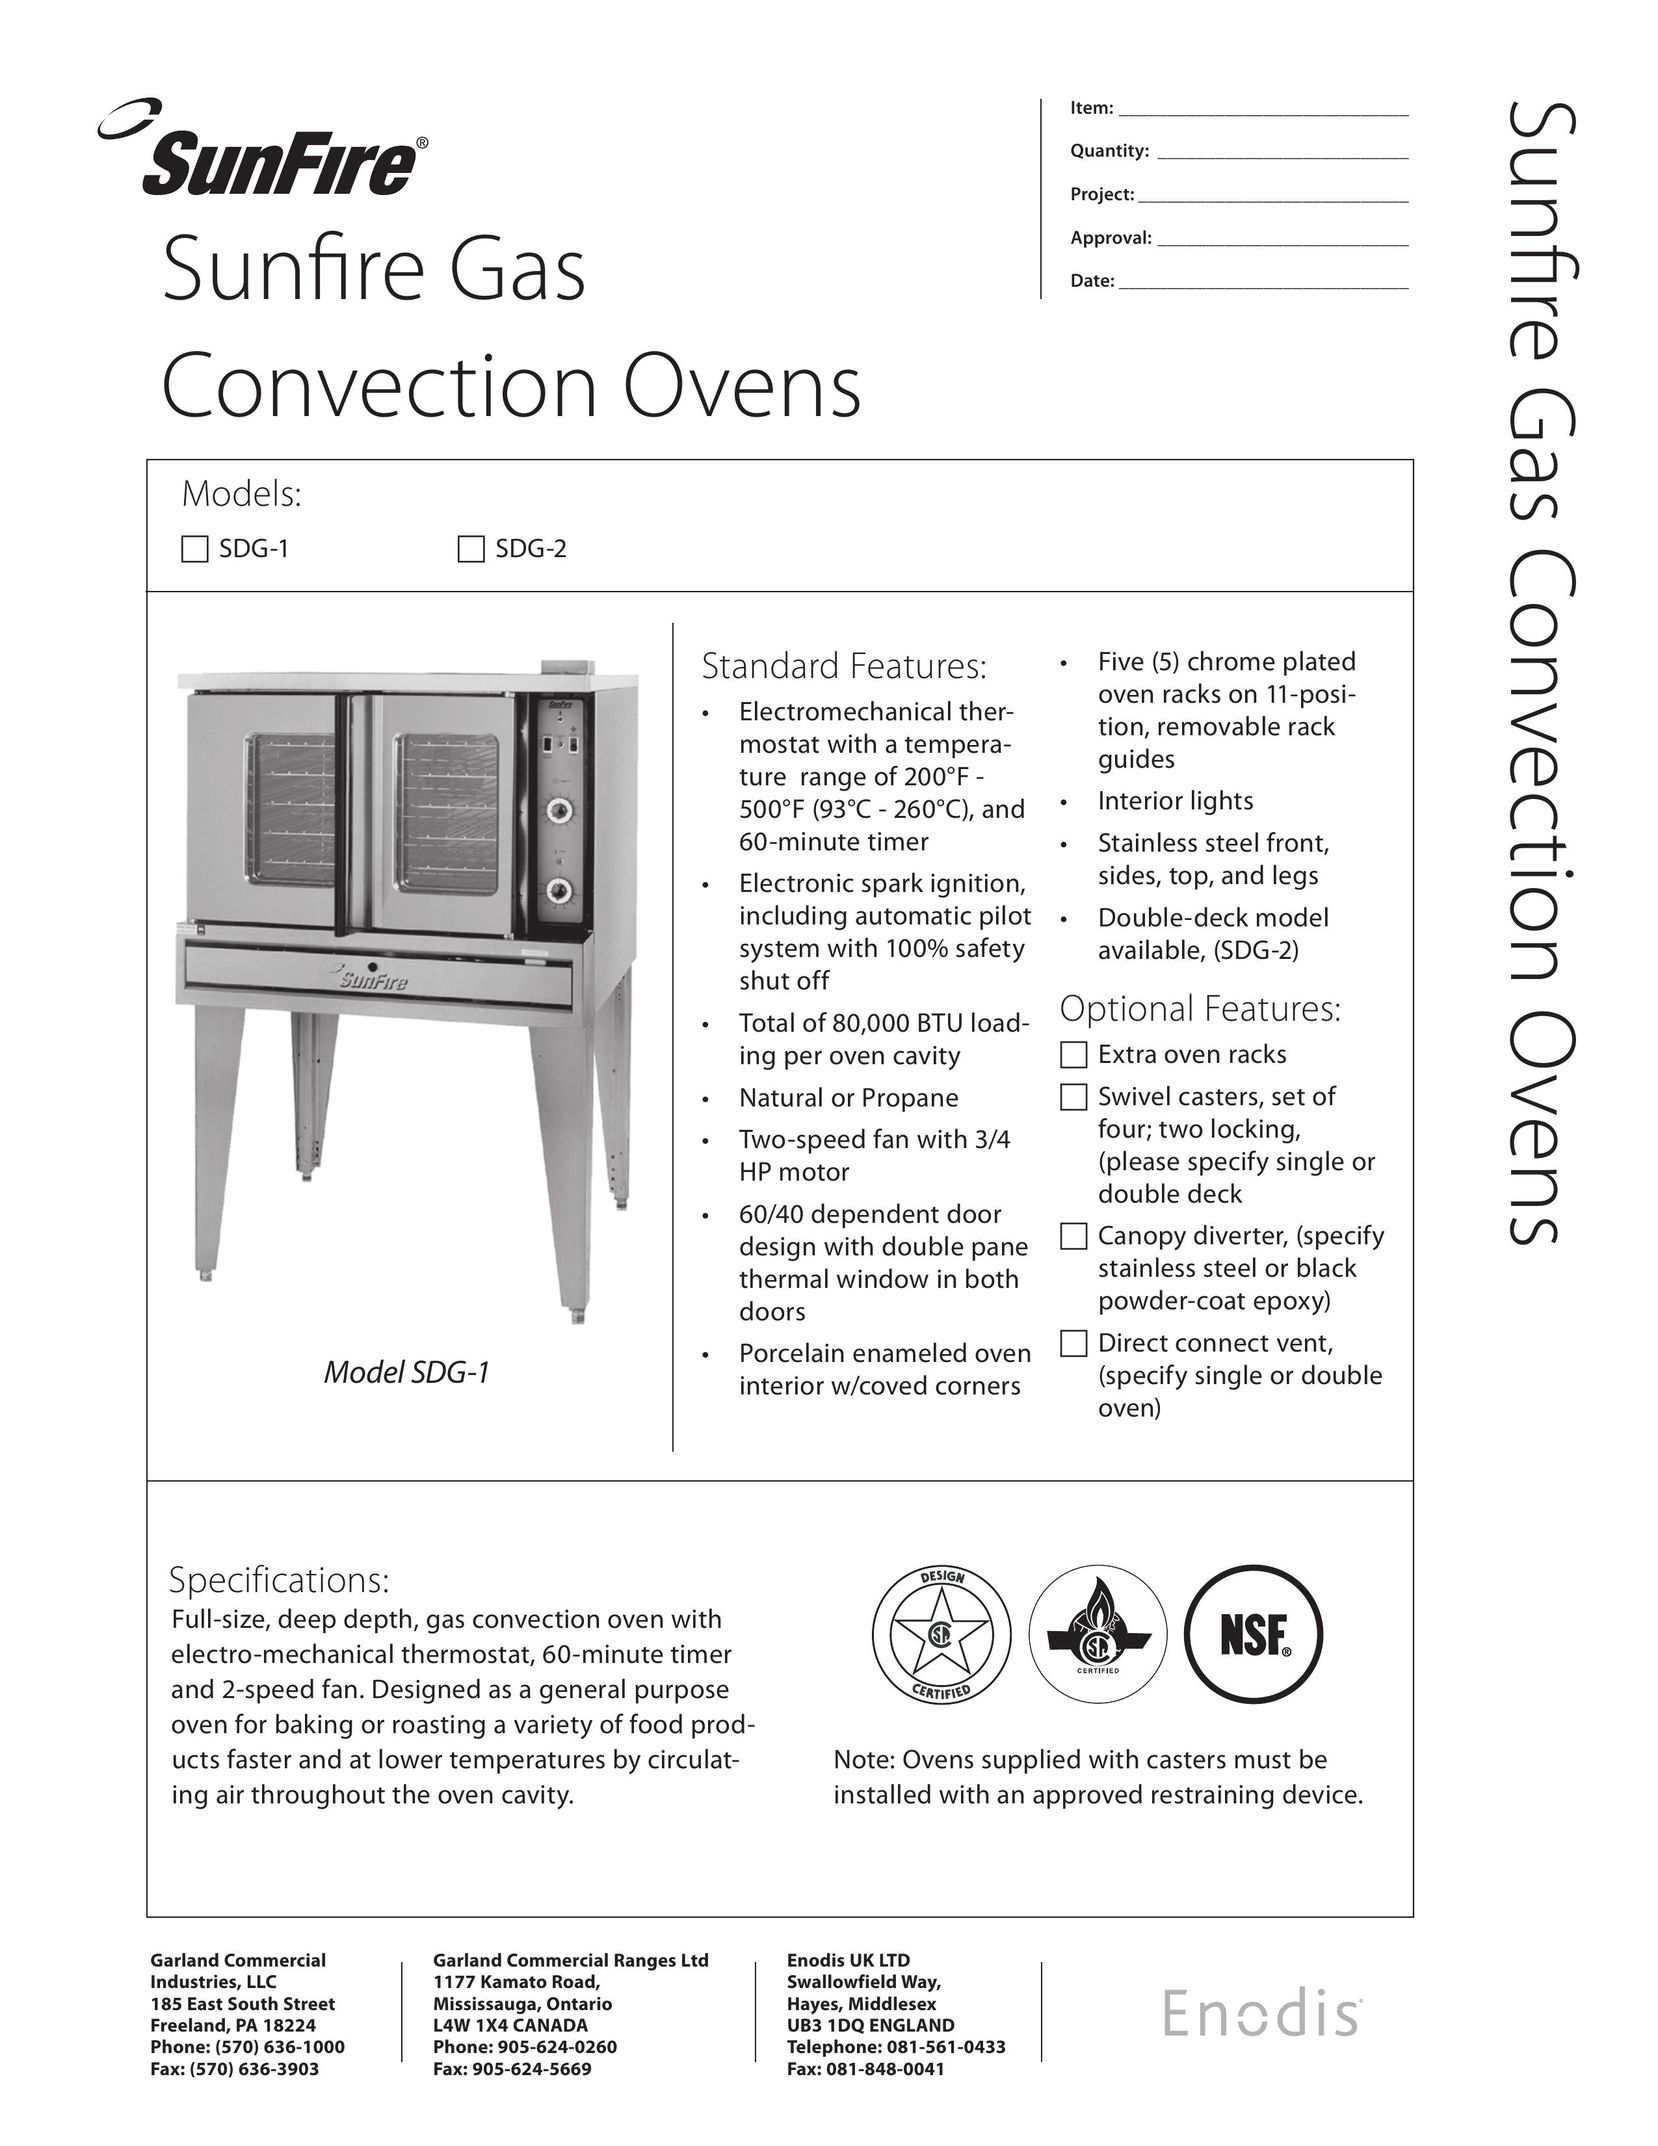 Sunfire SDG-1 Convection Oven User Manual